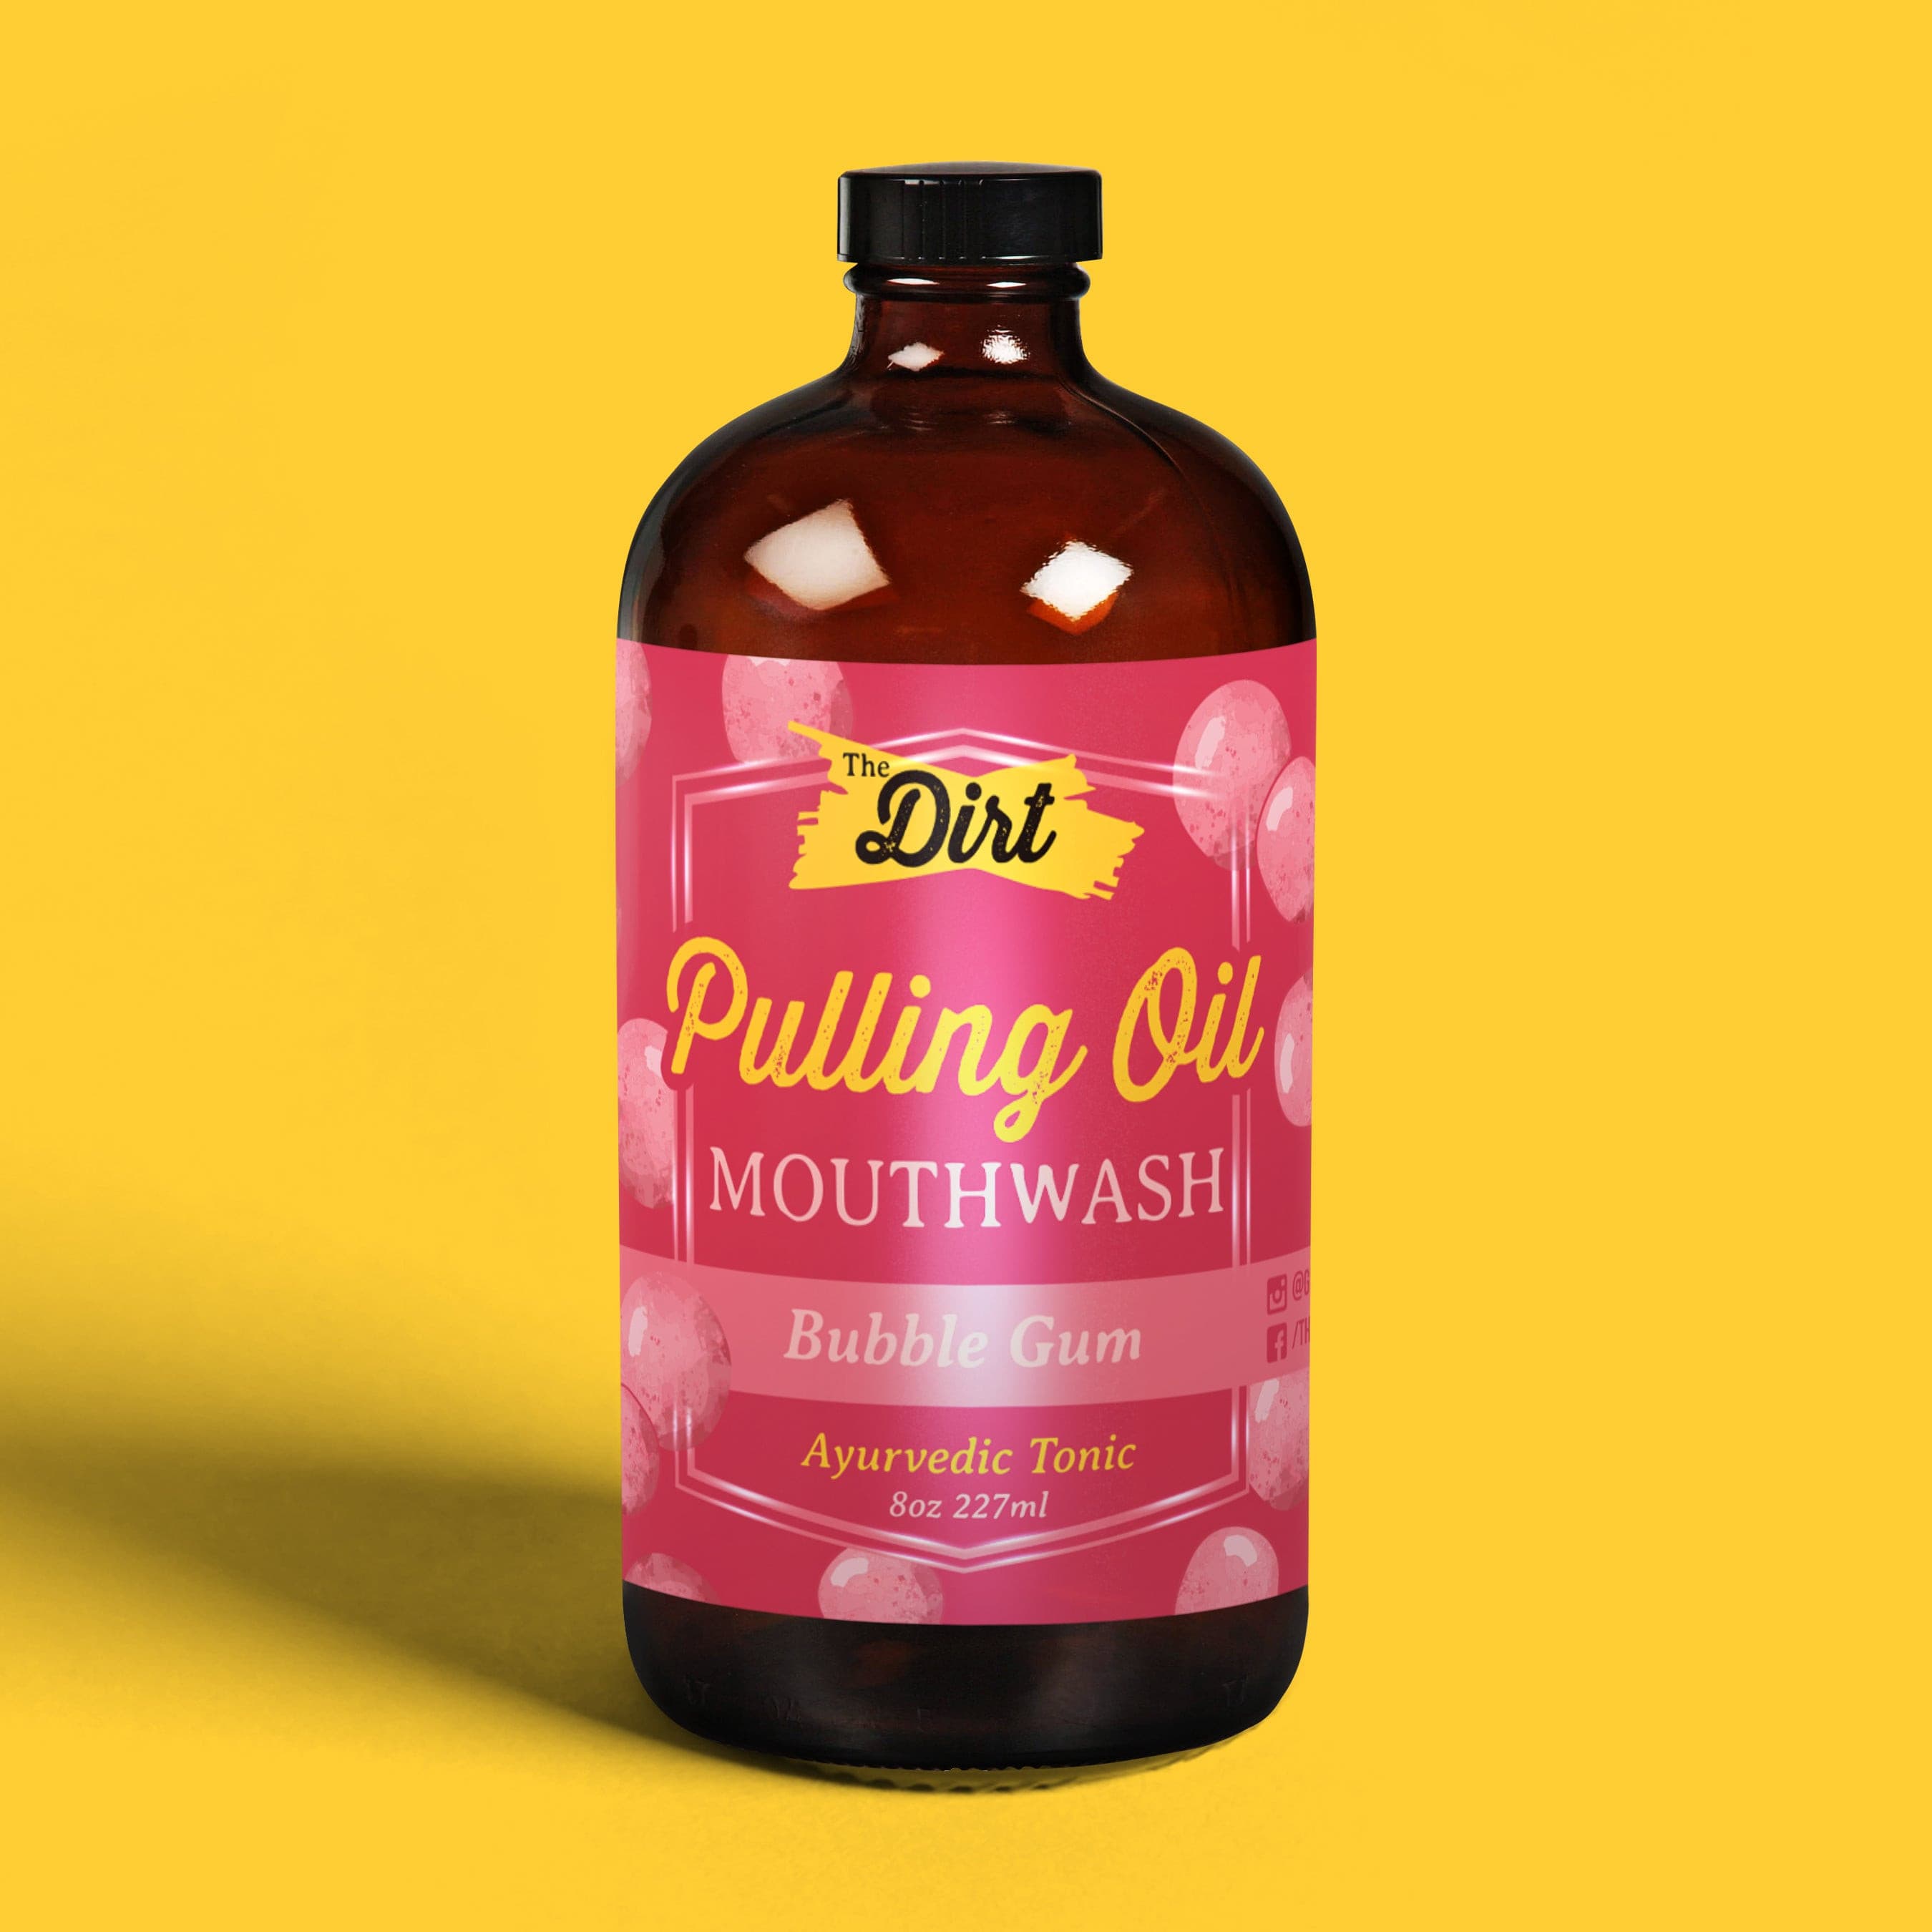 Oil Pulling Mouthwash - The Dirt - Super Natural Personal Care 8oz / Bubblegum Oral Care